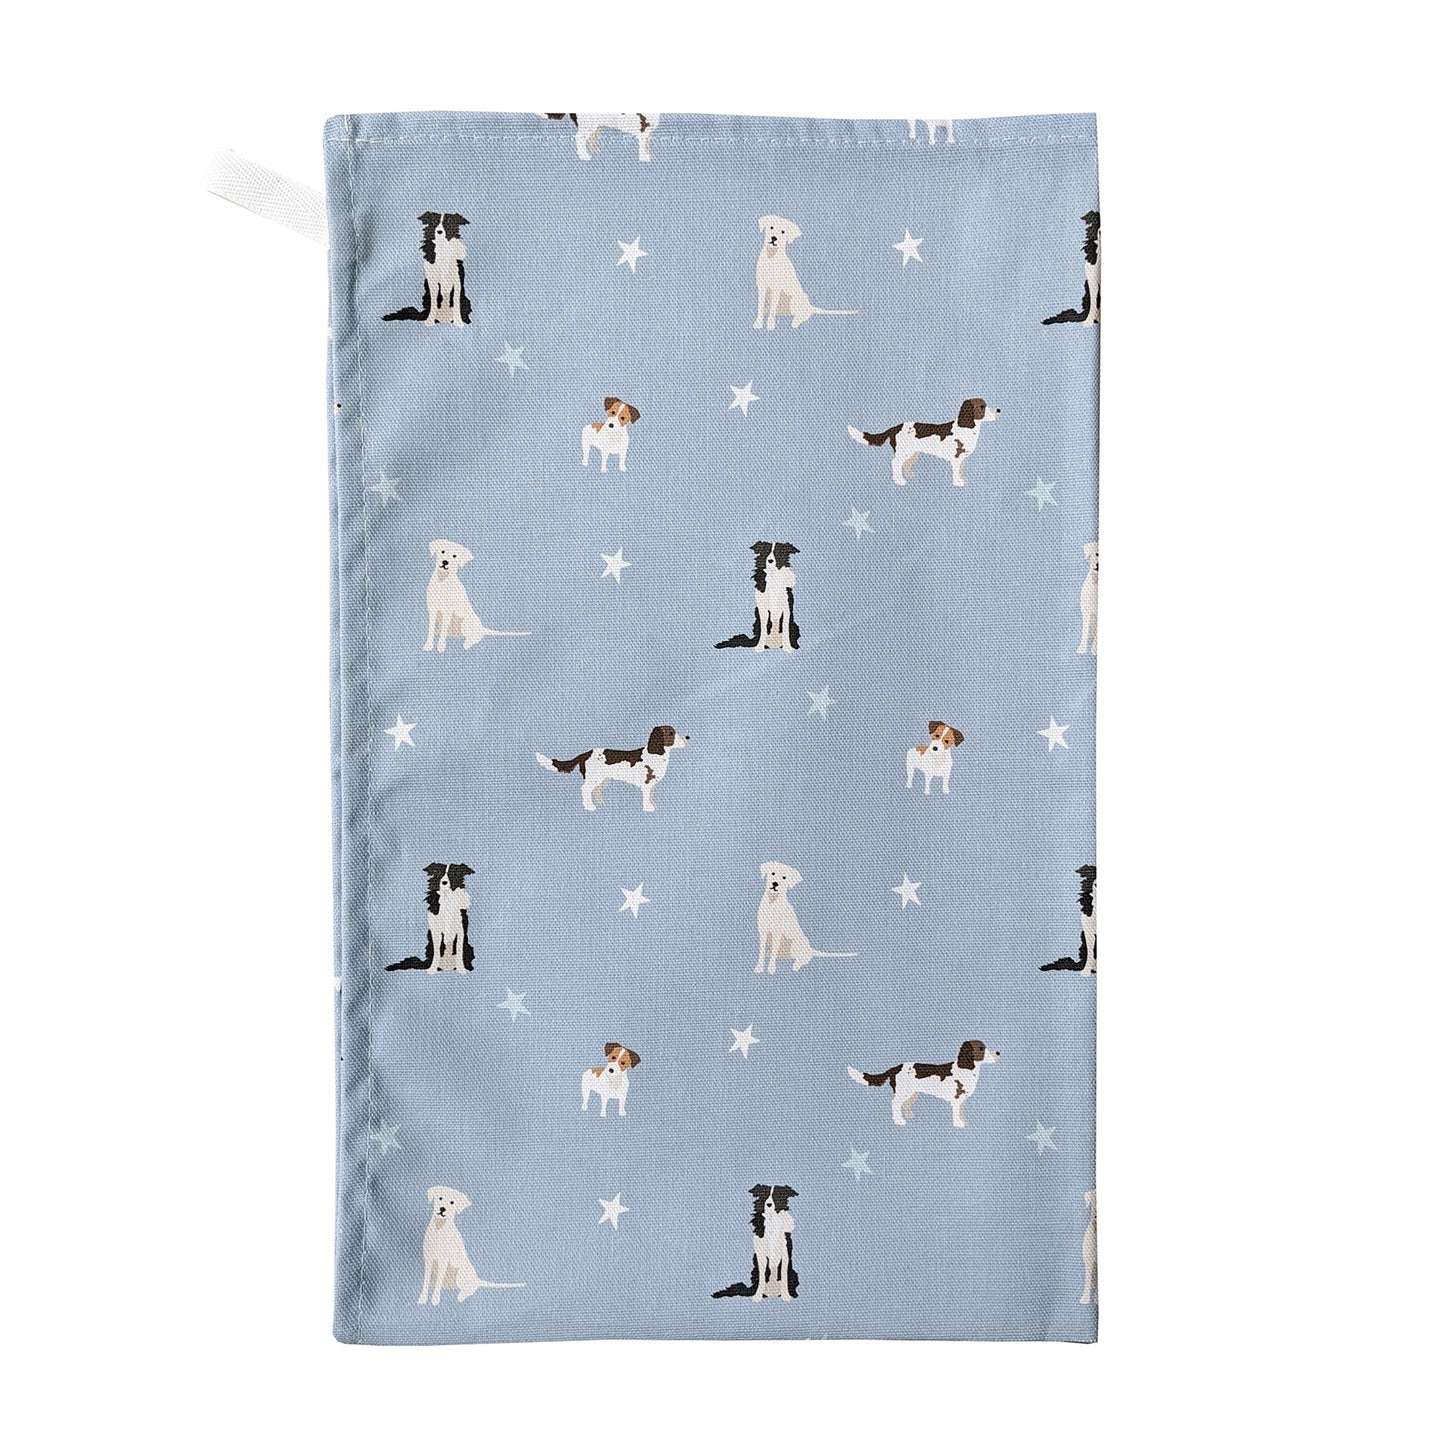 Rebecca Pitcher Tea Towel - 3 designs available